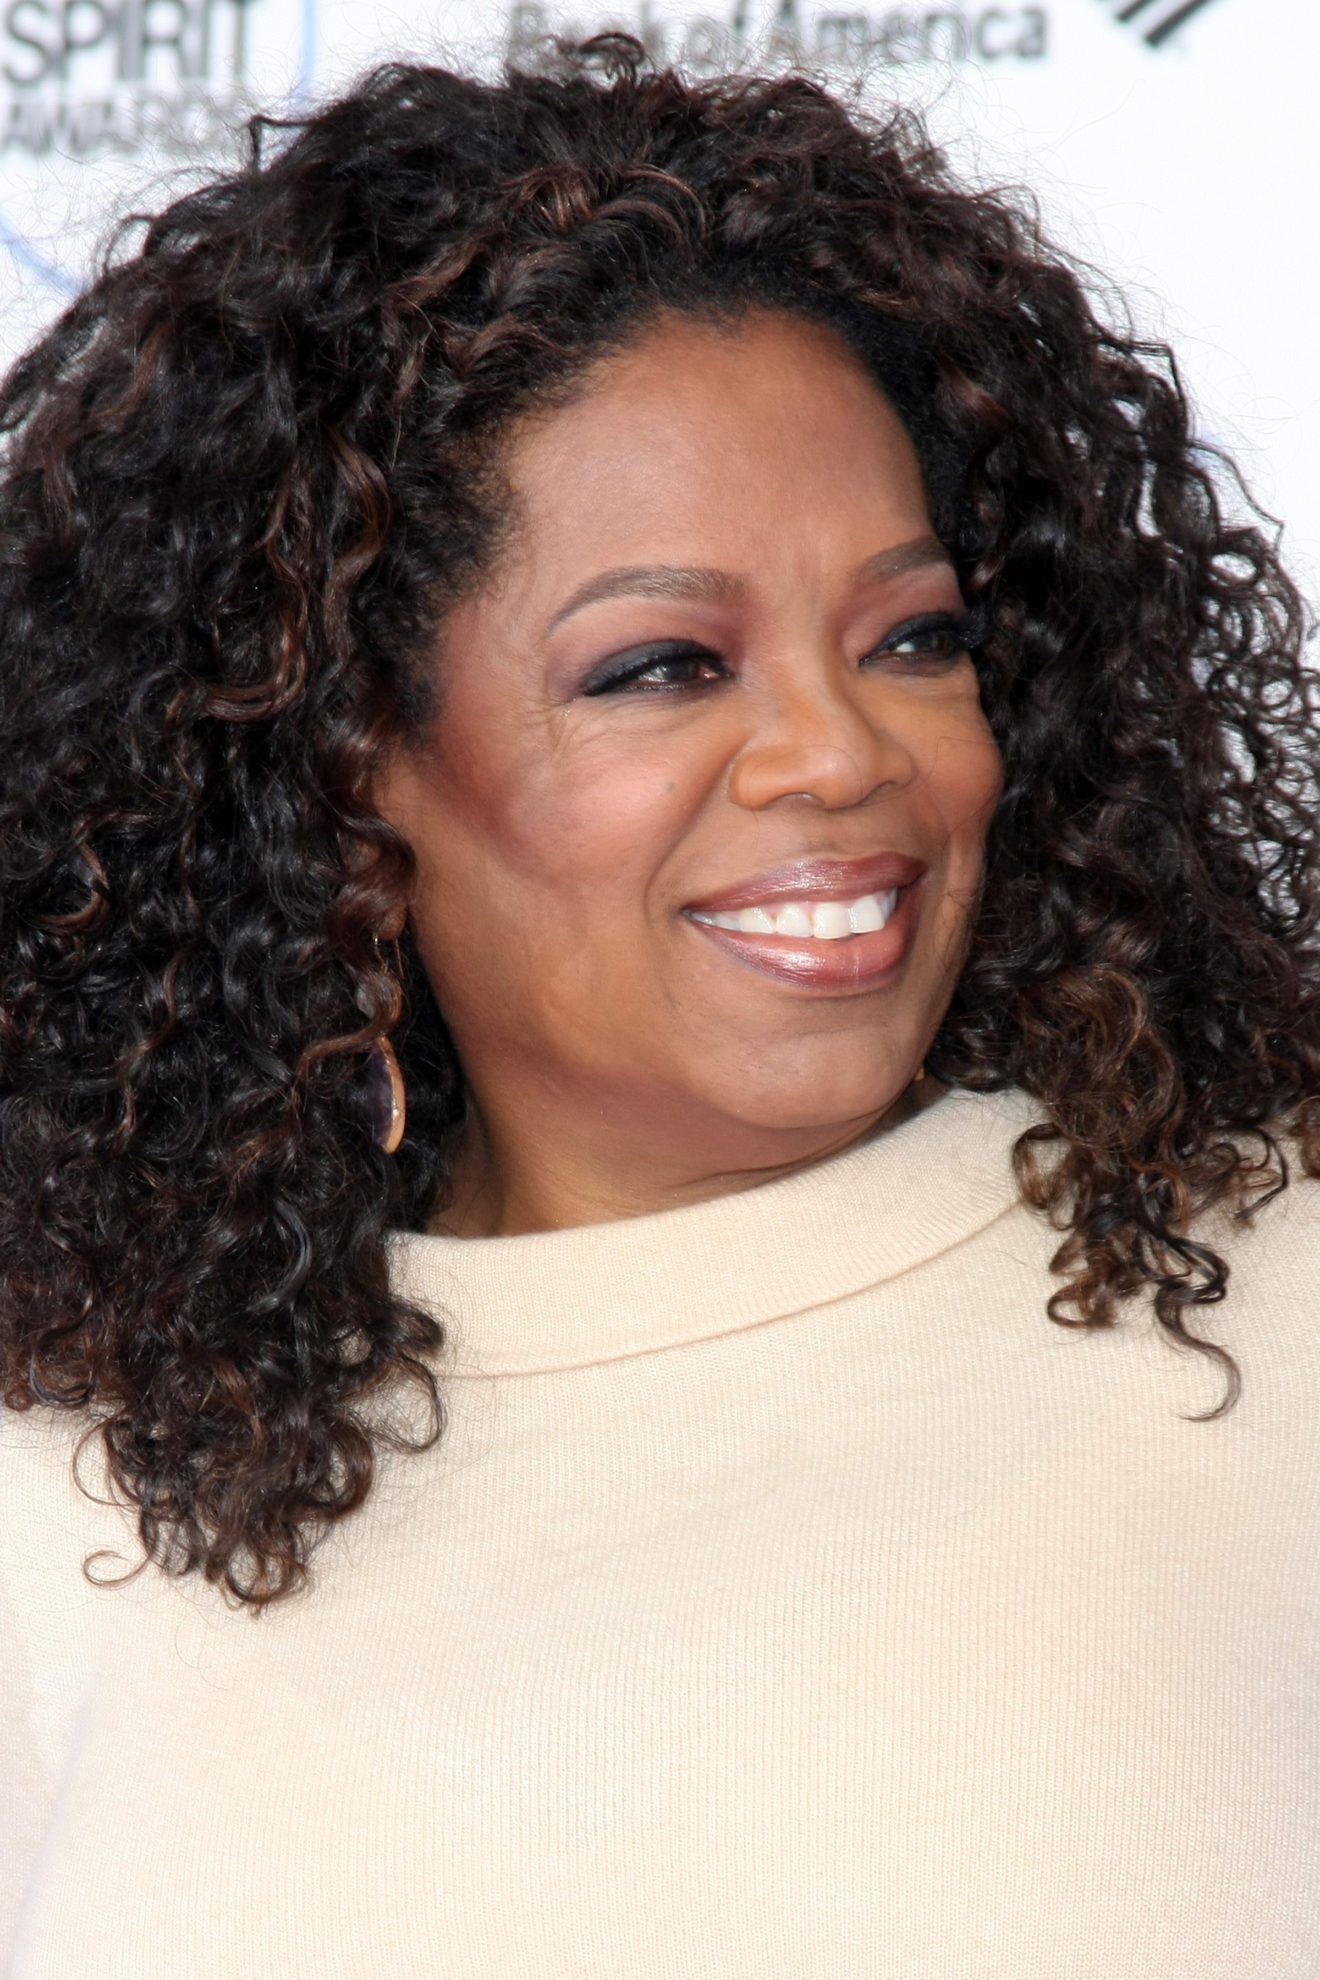 Would Oprah make a good candidate?